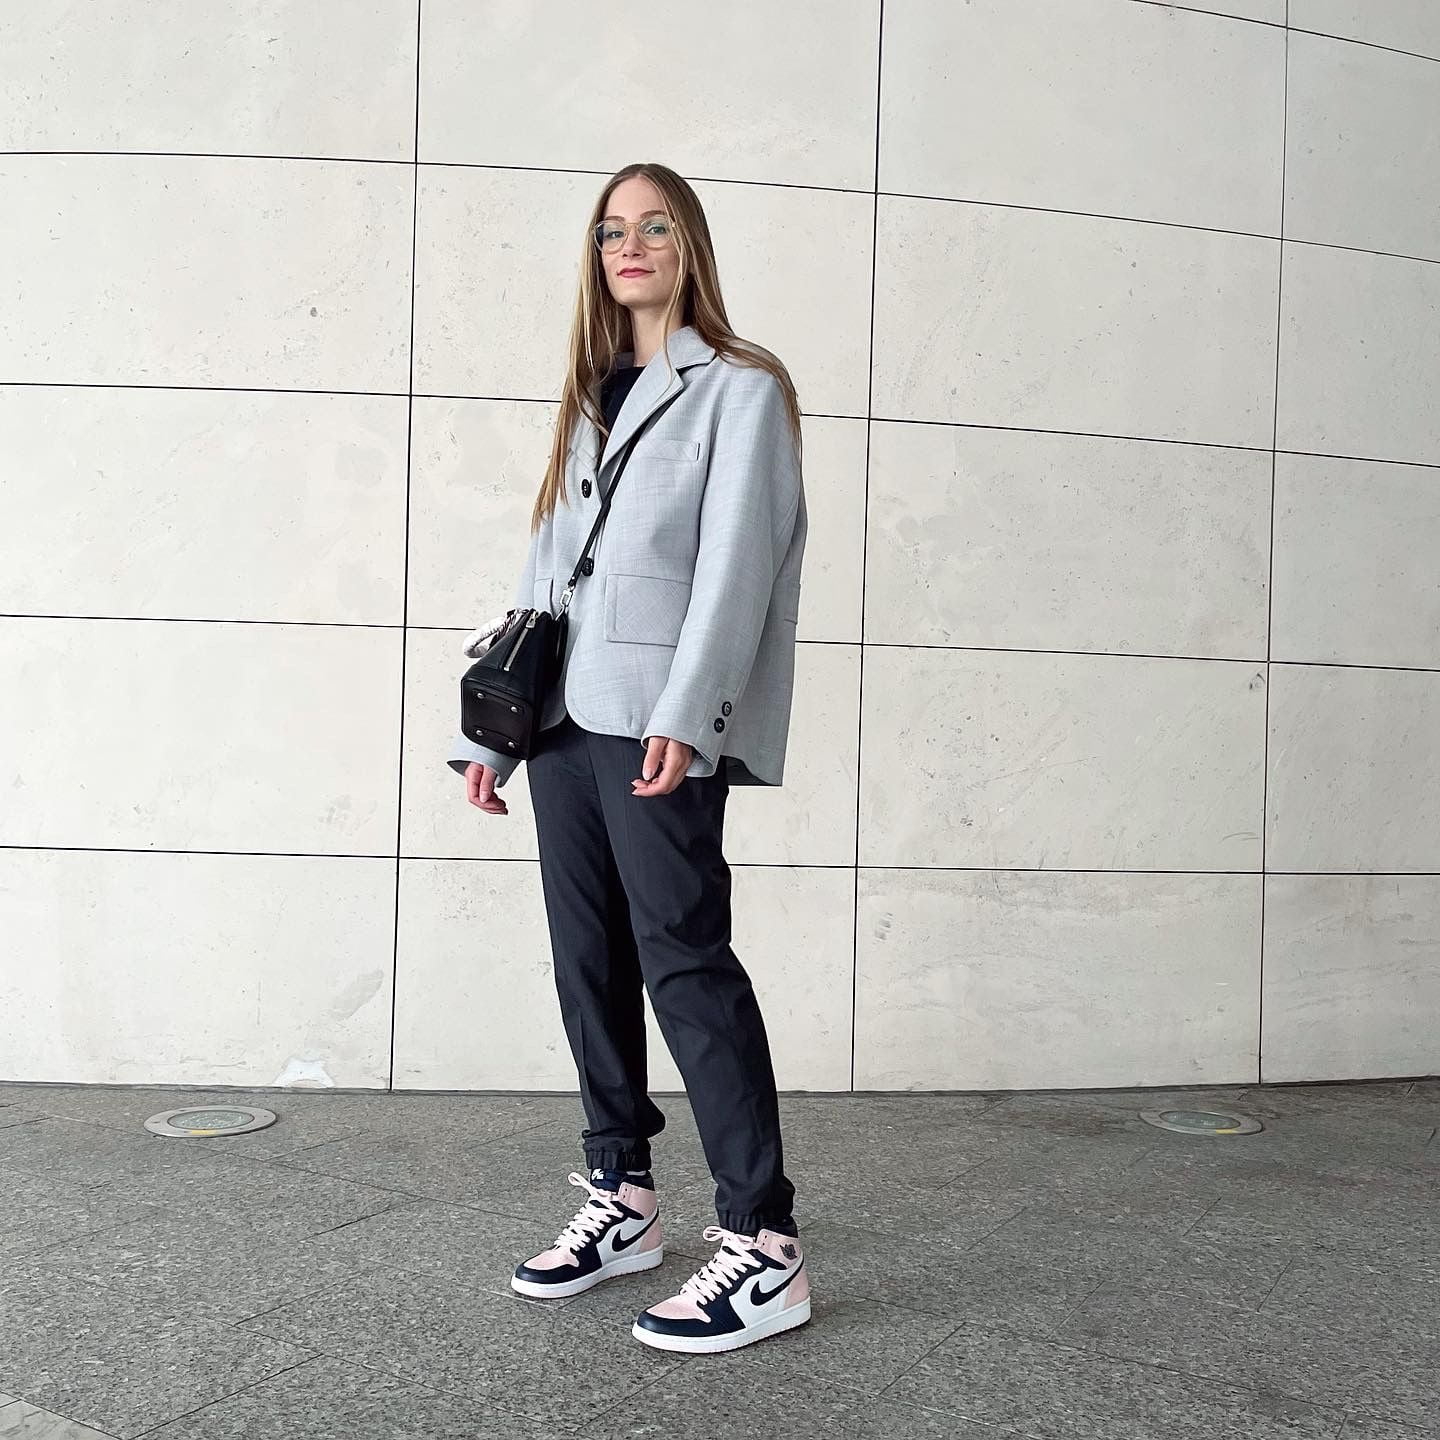 How to Style the Air Jordan 4 - KLEKT Blog